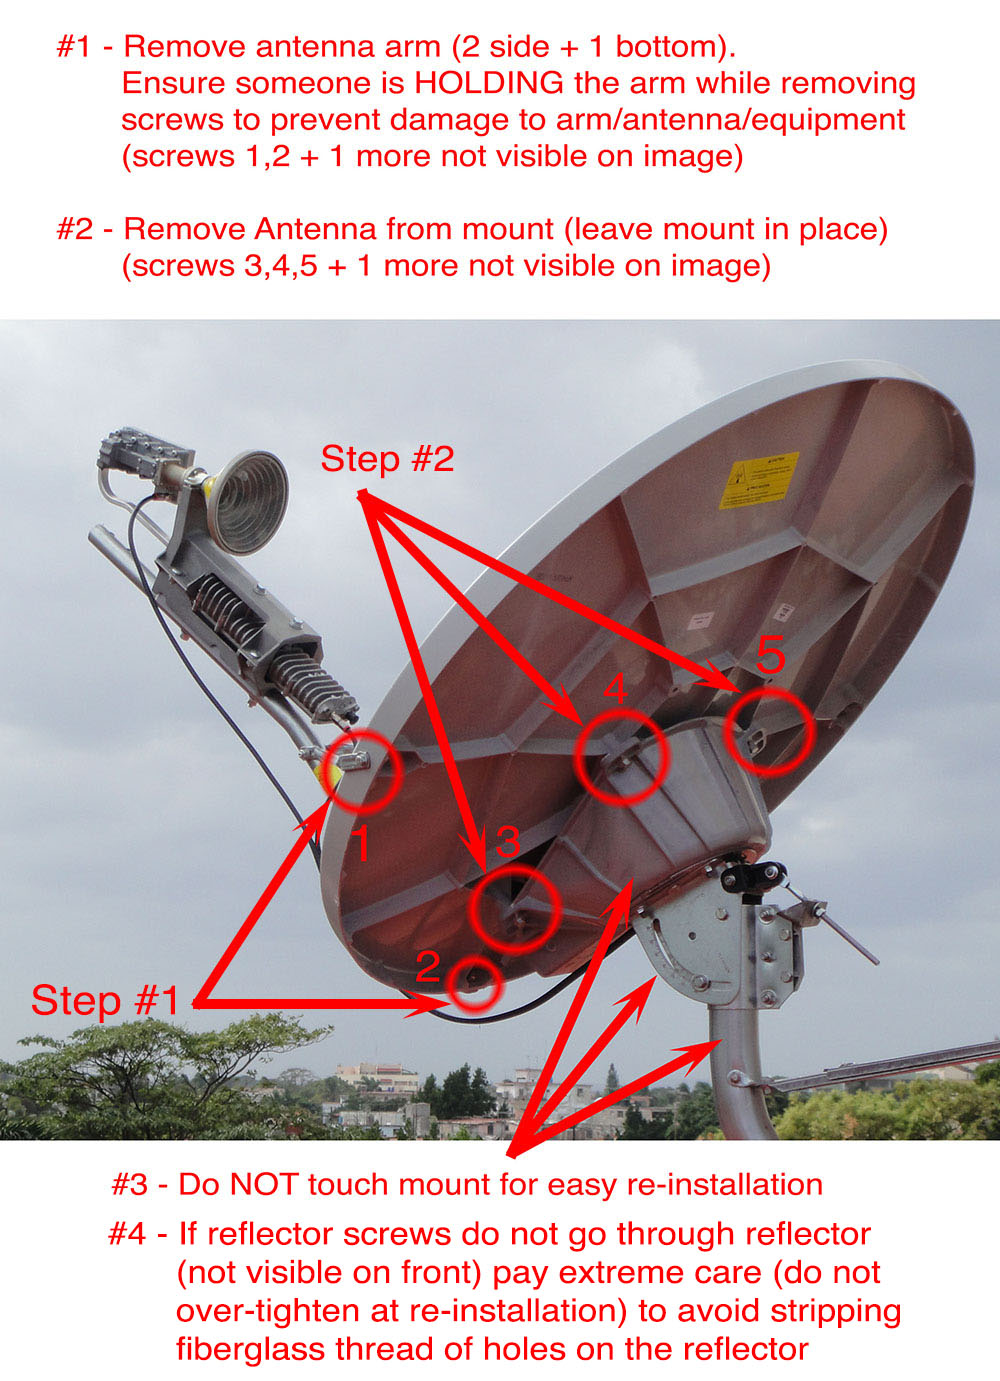 1.20m Antenna Removal